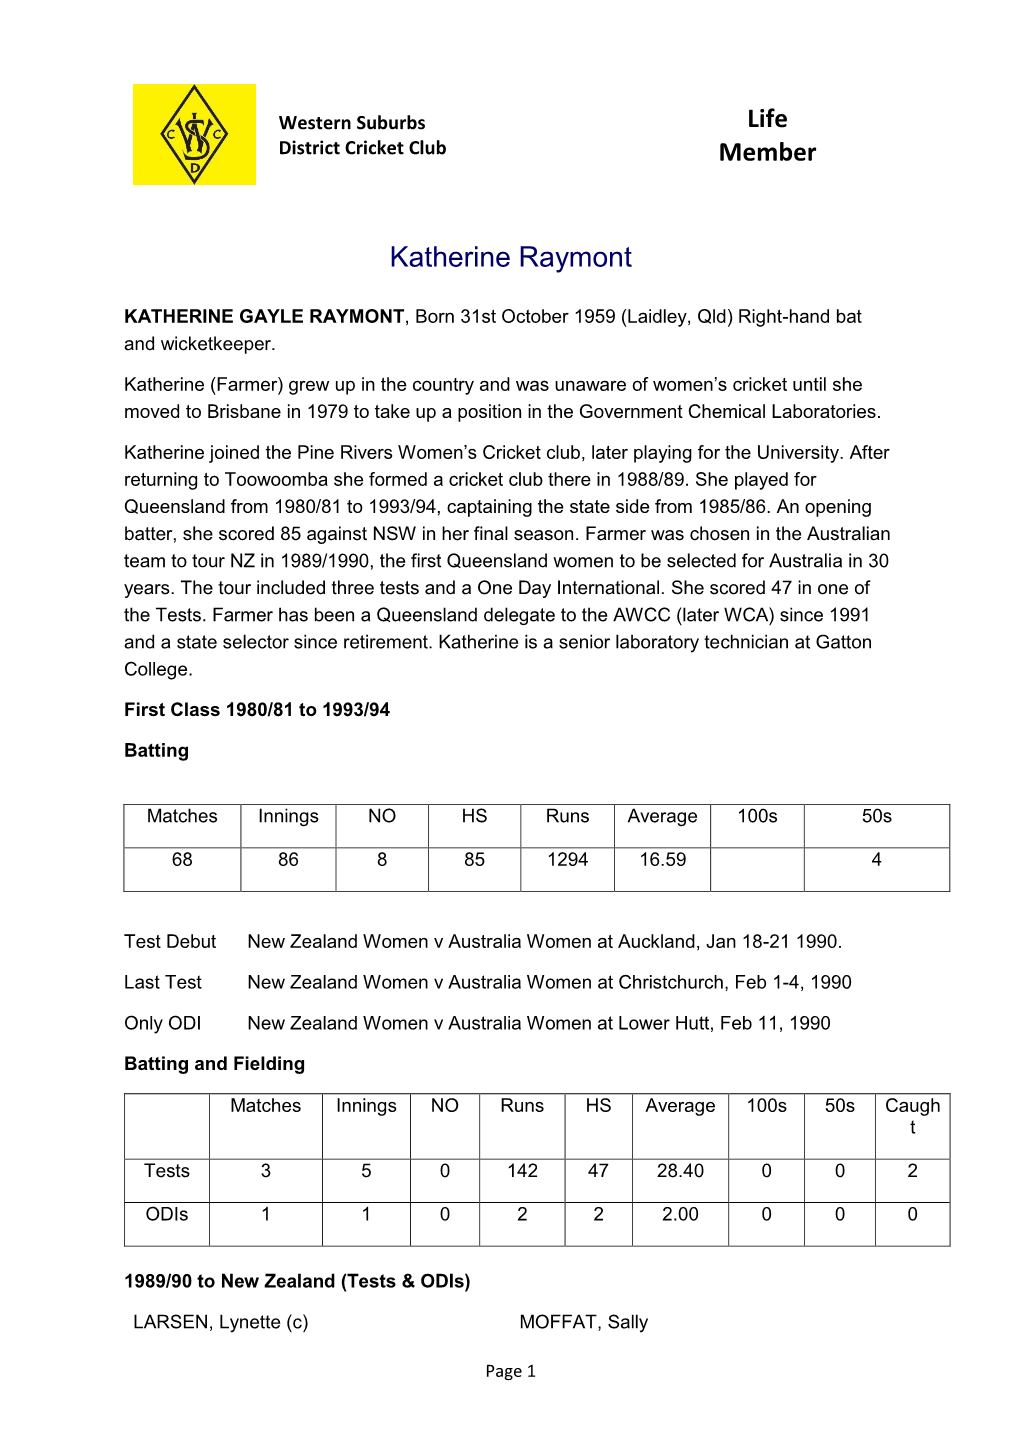 Katherine Raymont